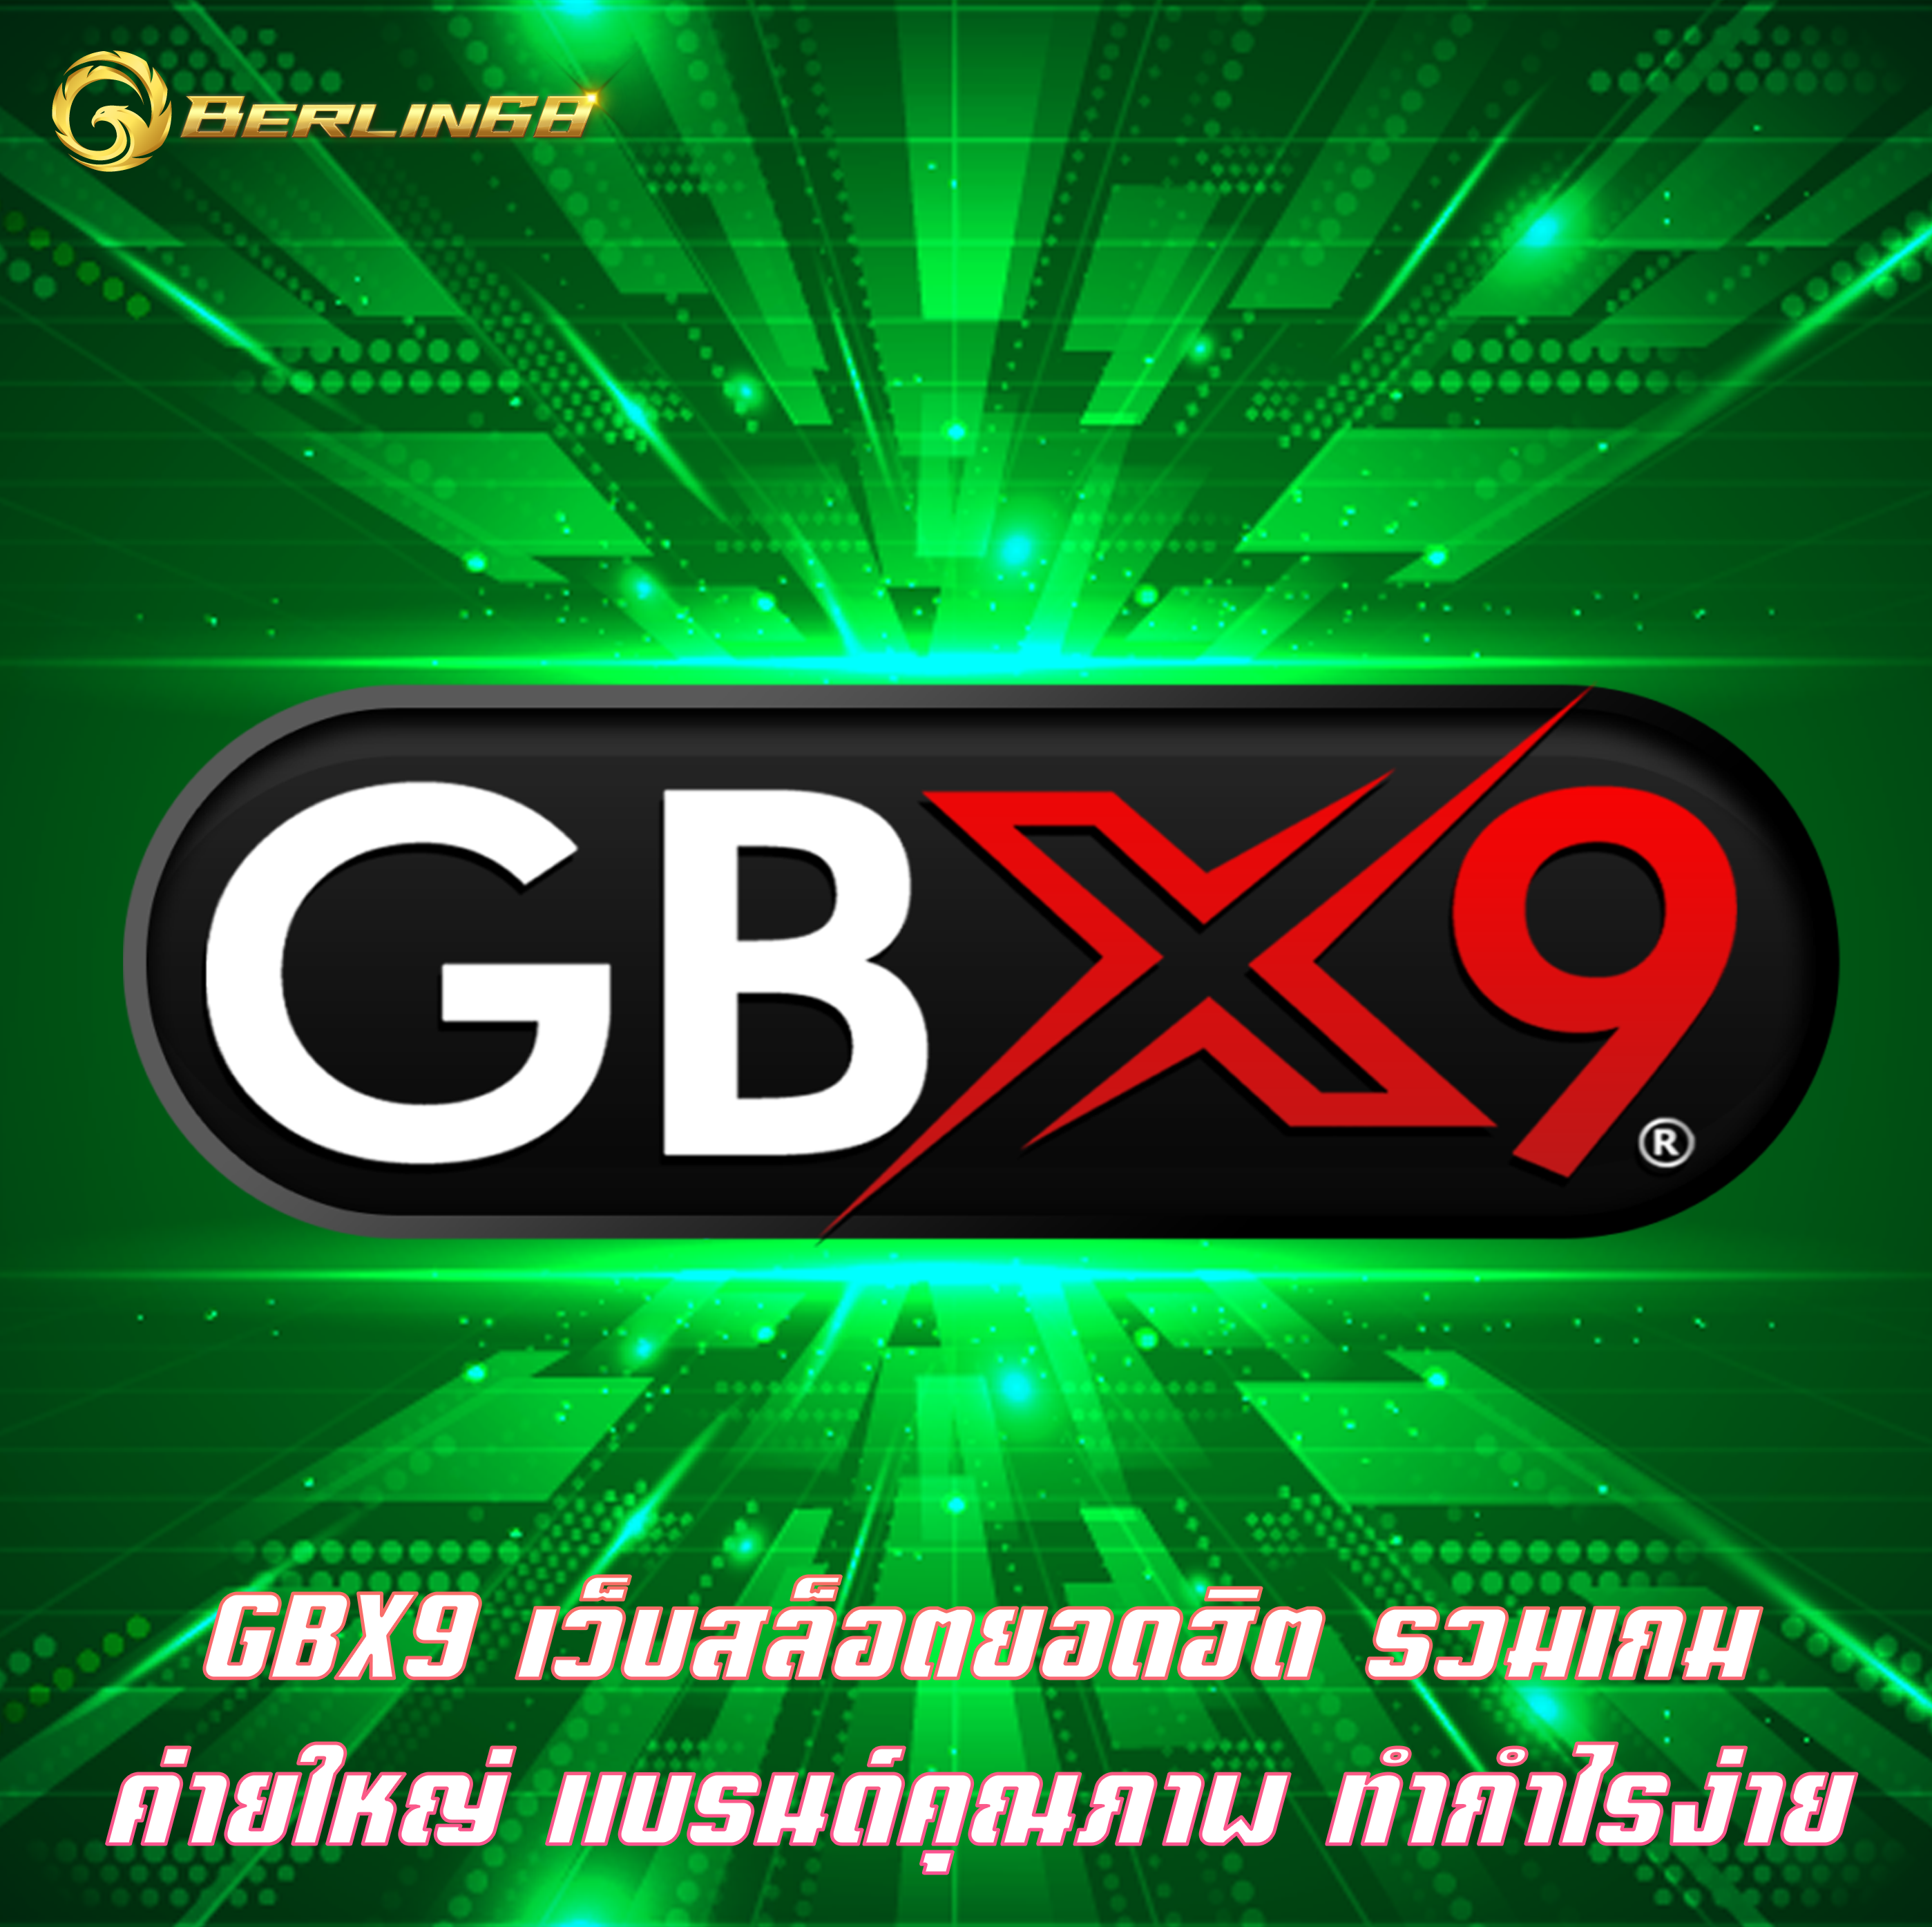 GBX9 เว็บสล็อตยอดฮิต รวมเกมค่ายใหญ่ แบรนด์คุณภาพ ทำกำไรง่าย